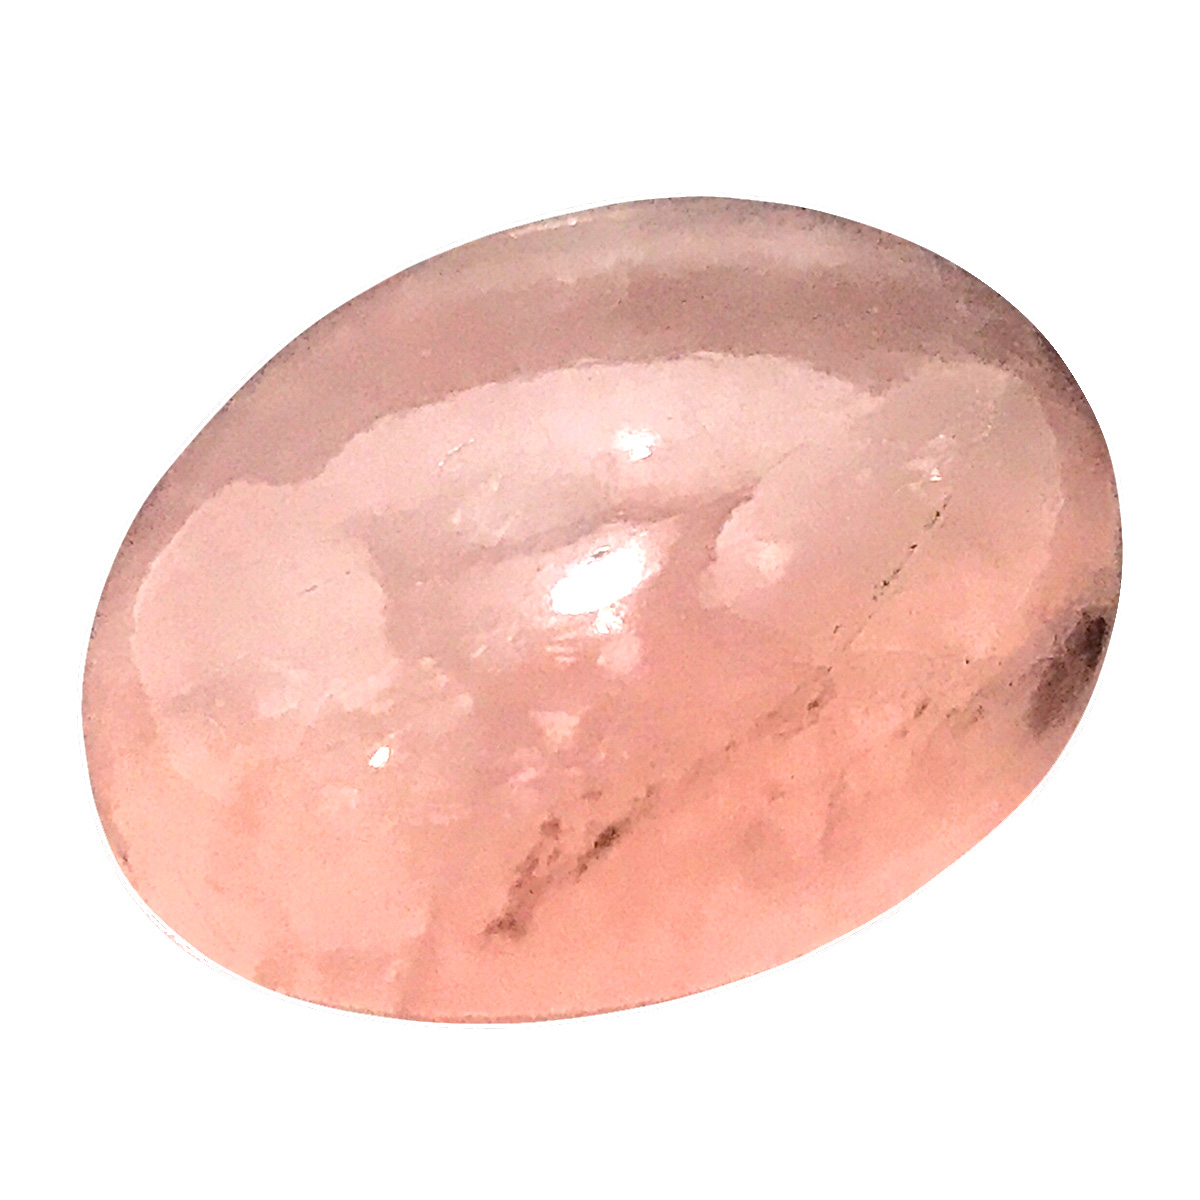 gs-sp-3843 ローズクォーツ(Rose quartz) 天然石ルース裸石 販売/パーツ工房